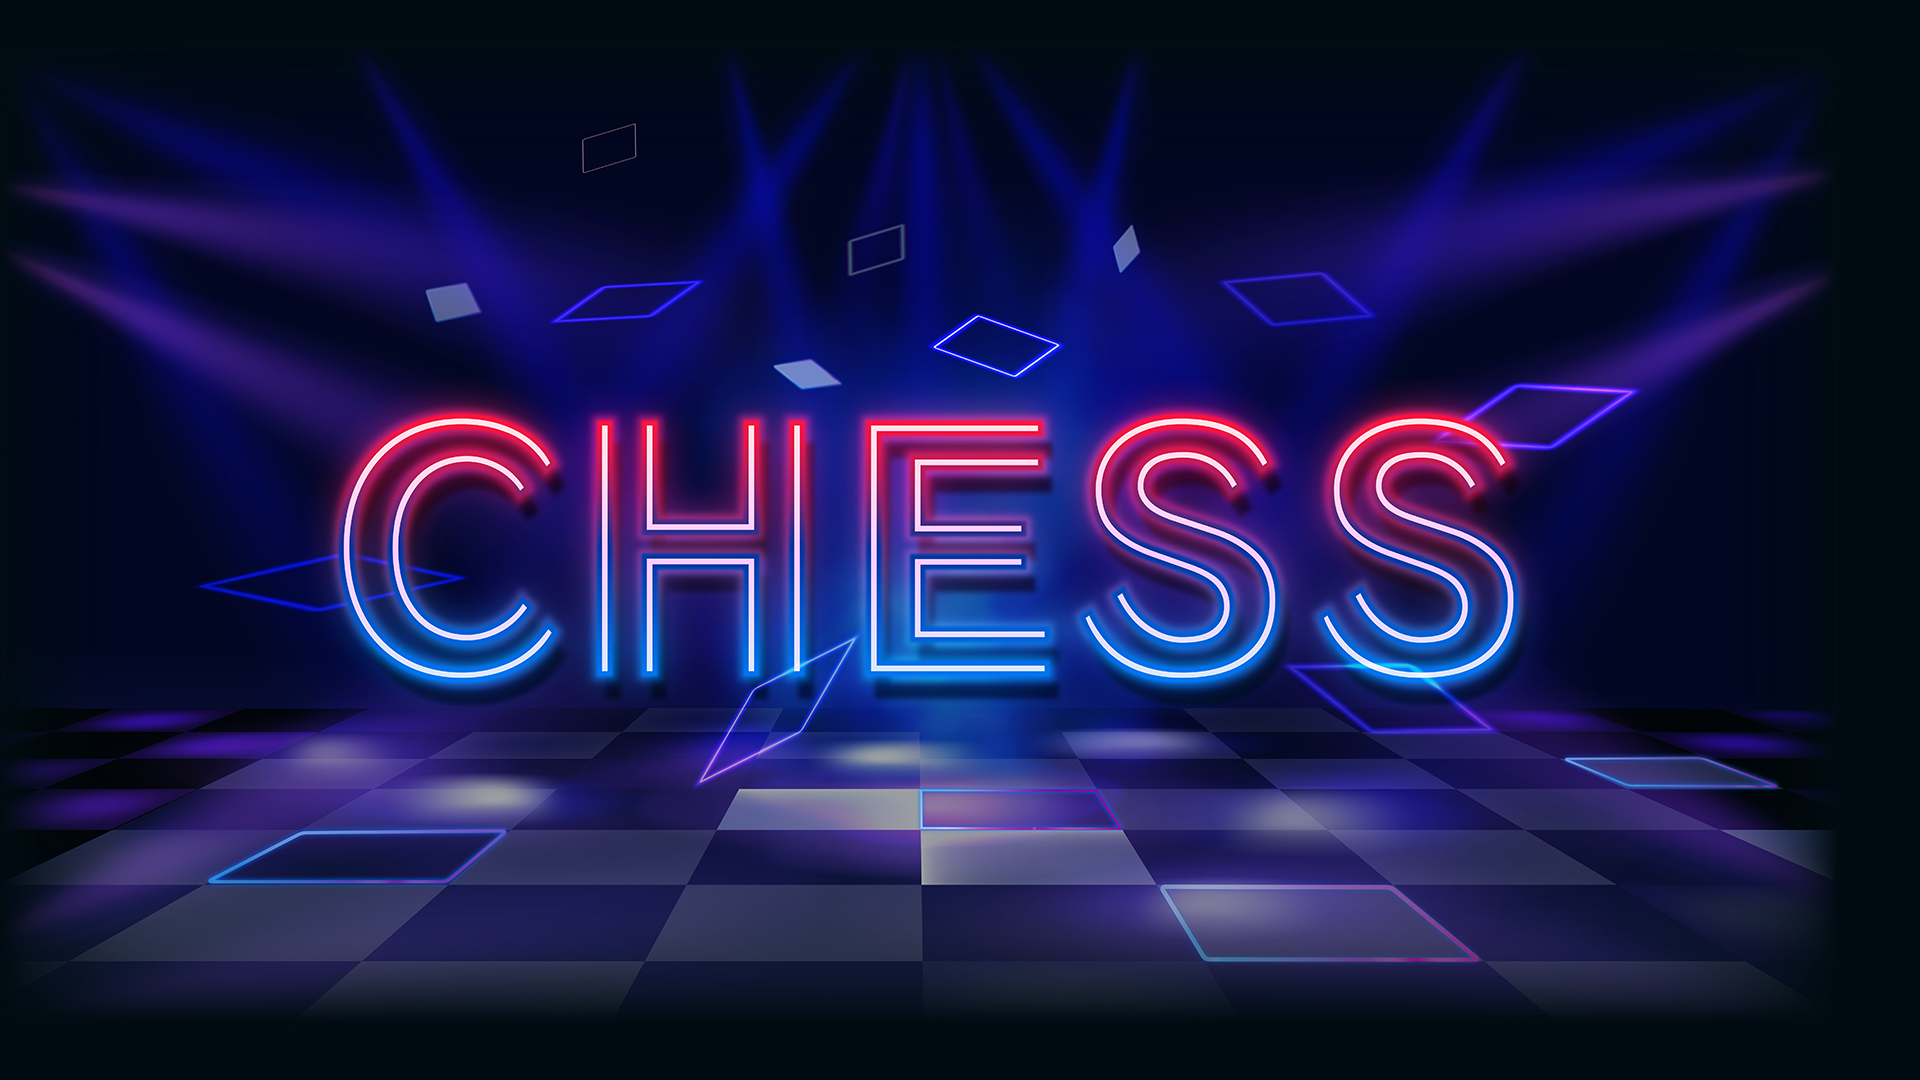 Muny Chess show logo